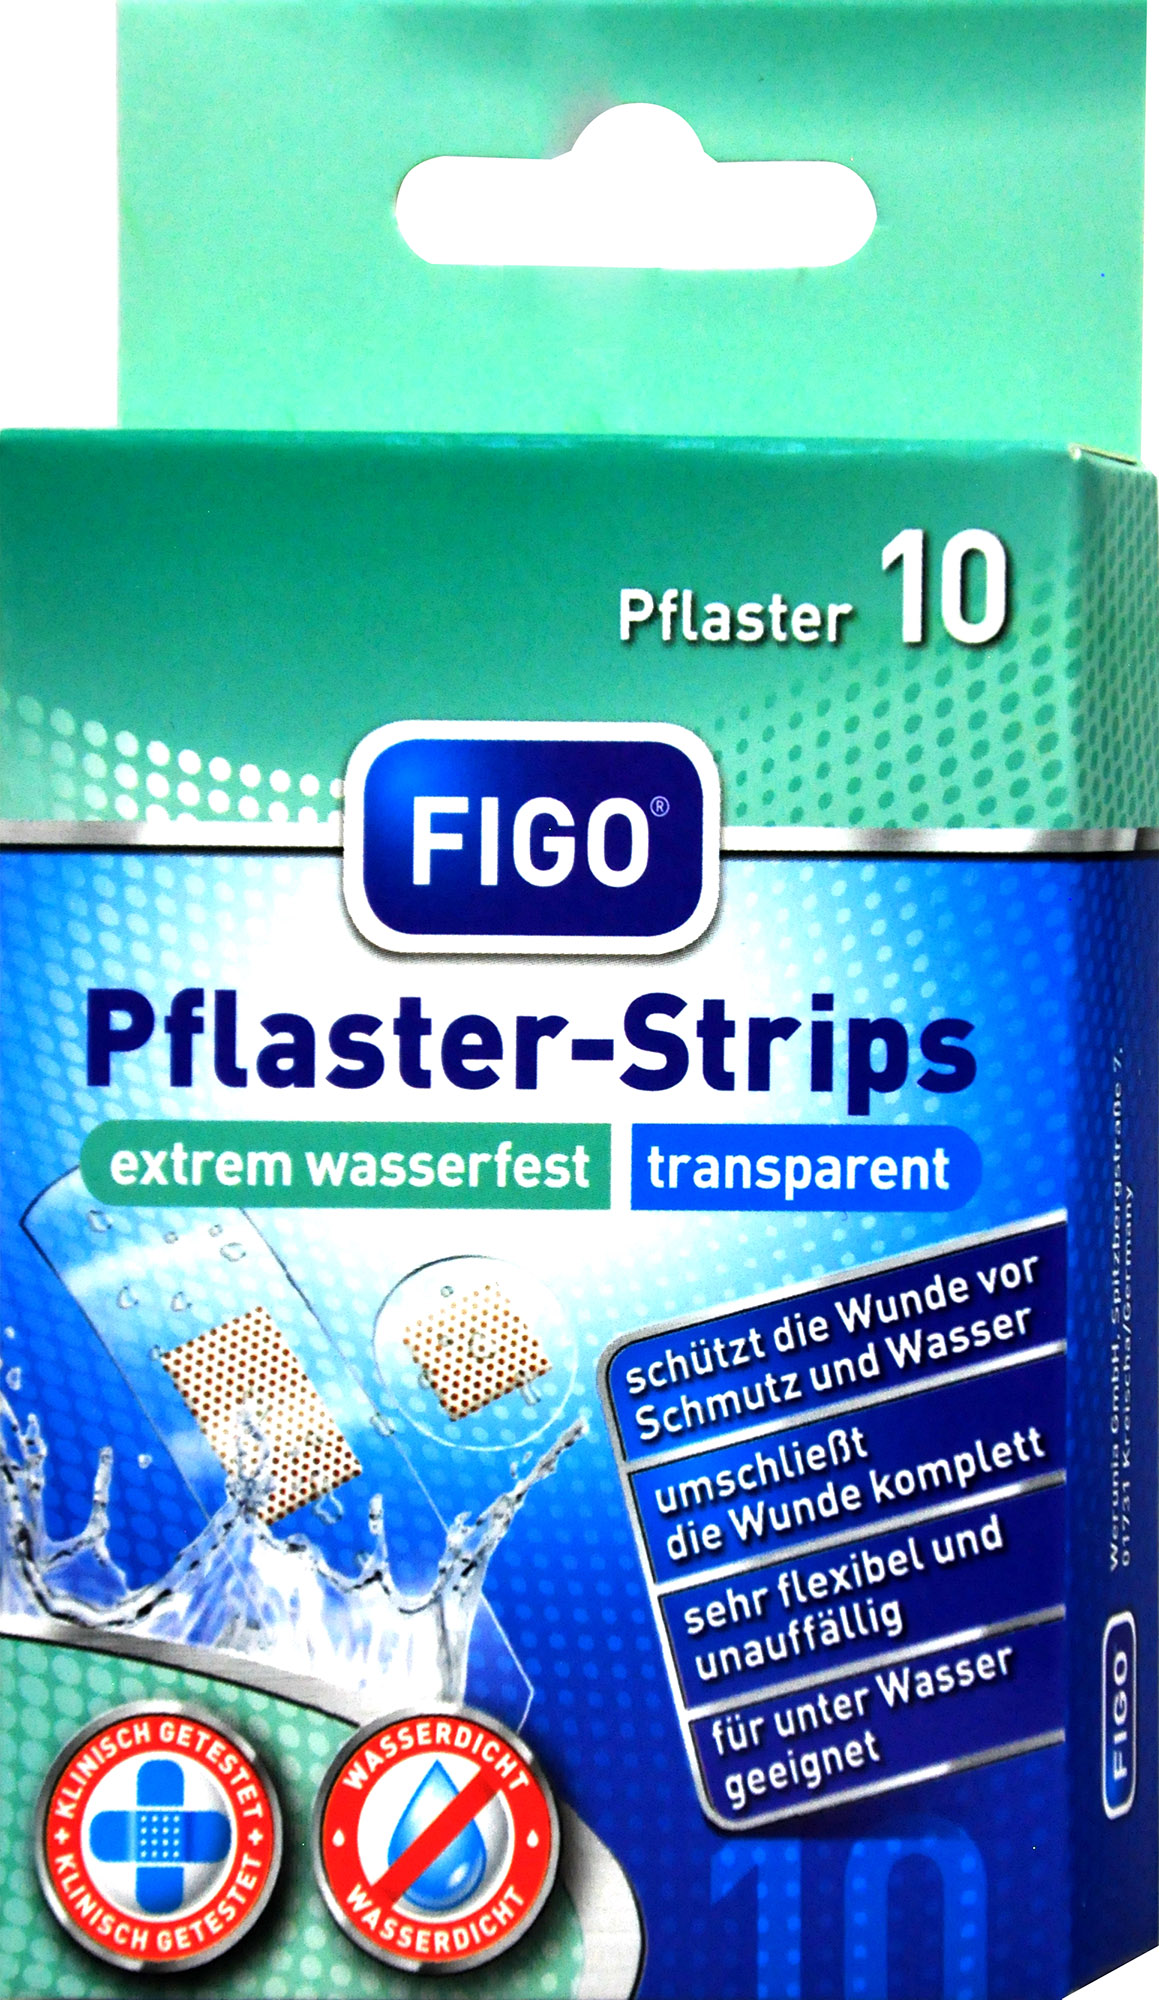 Figo plaster strip extremely waterproof, 10 pieces 